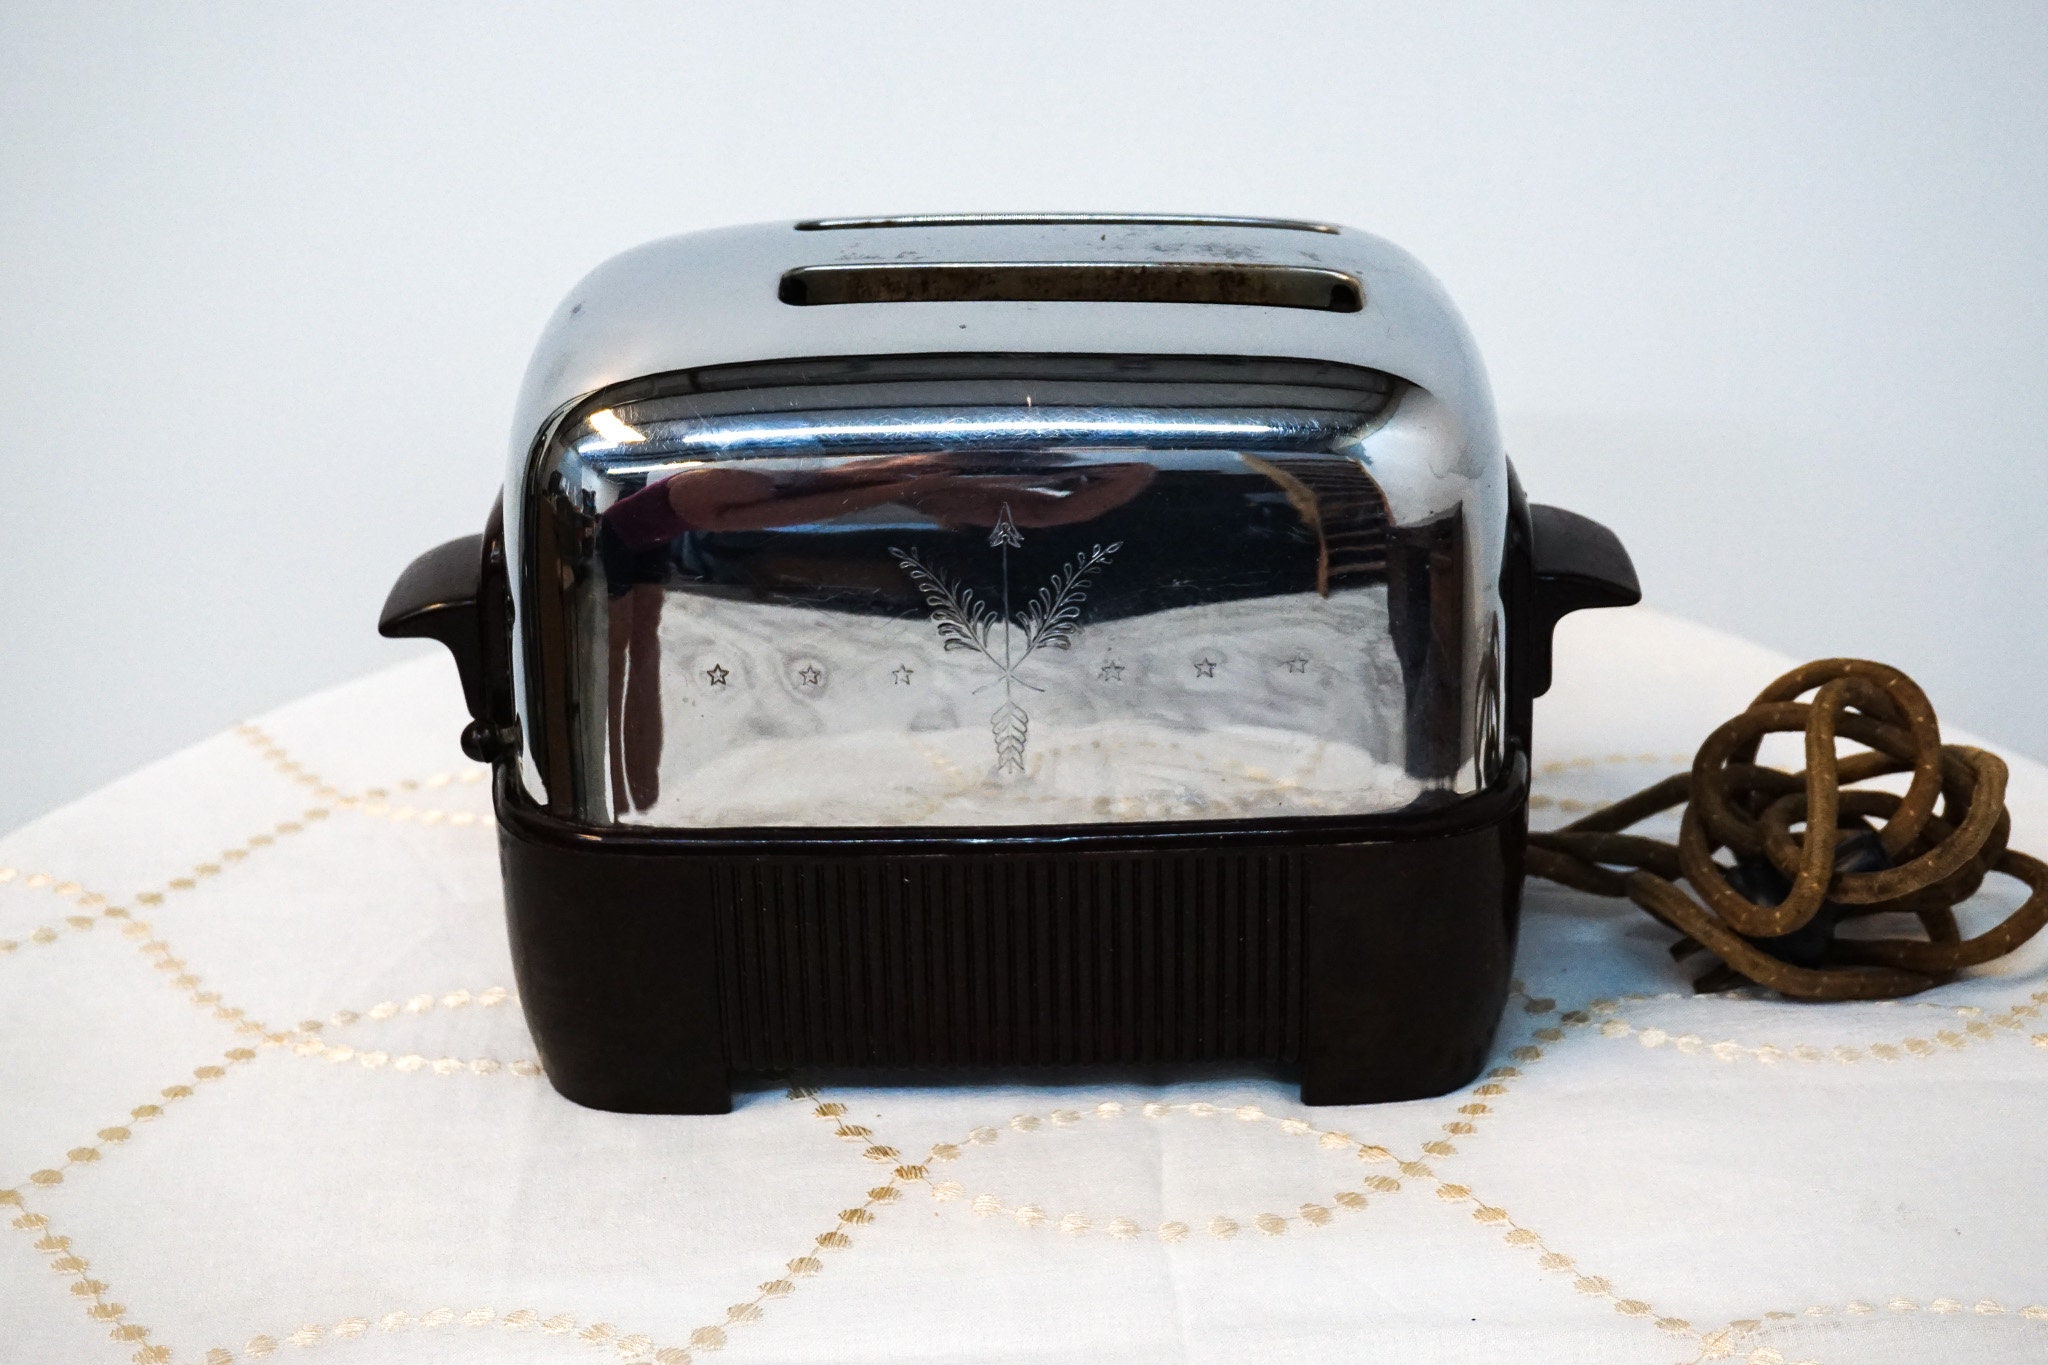 Vintage Mid Century General Electric Toaster 2 Slice 